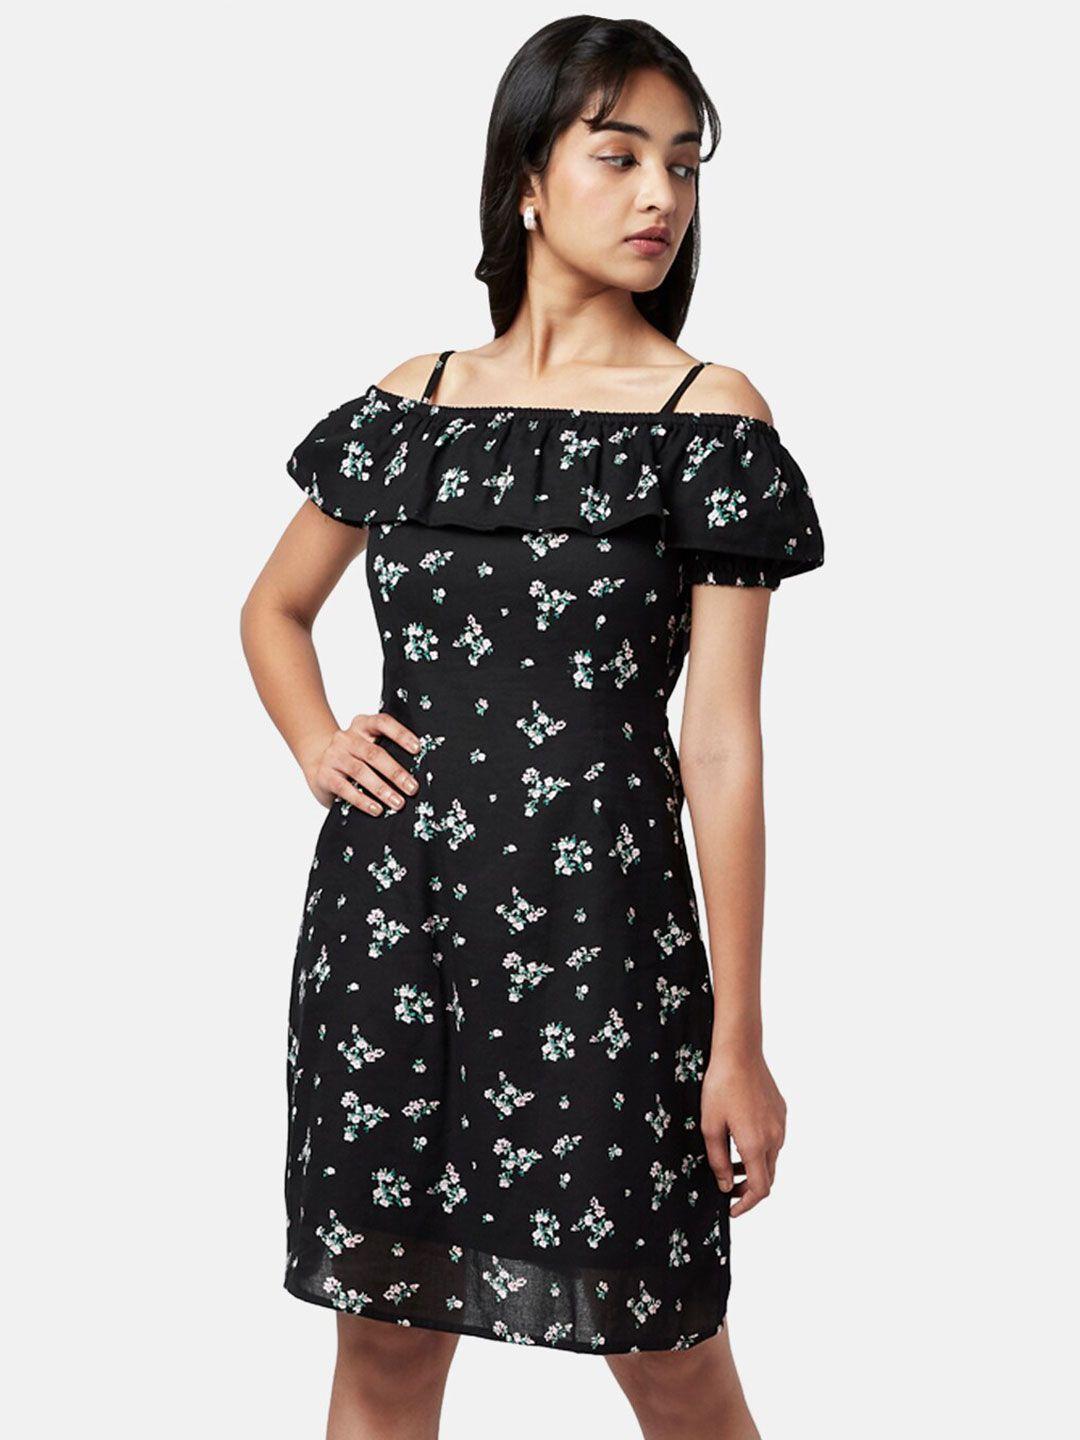 yu-by-pantaloons-black-floral-dress